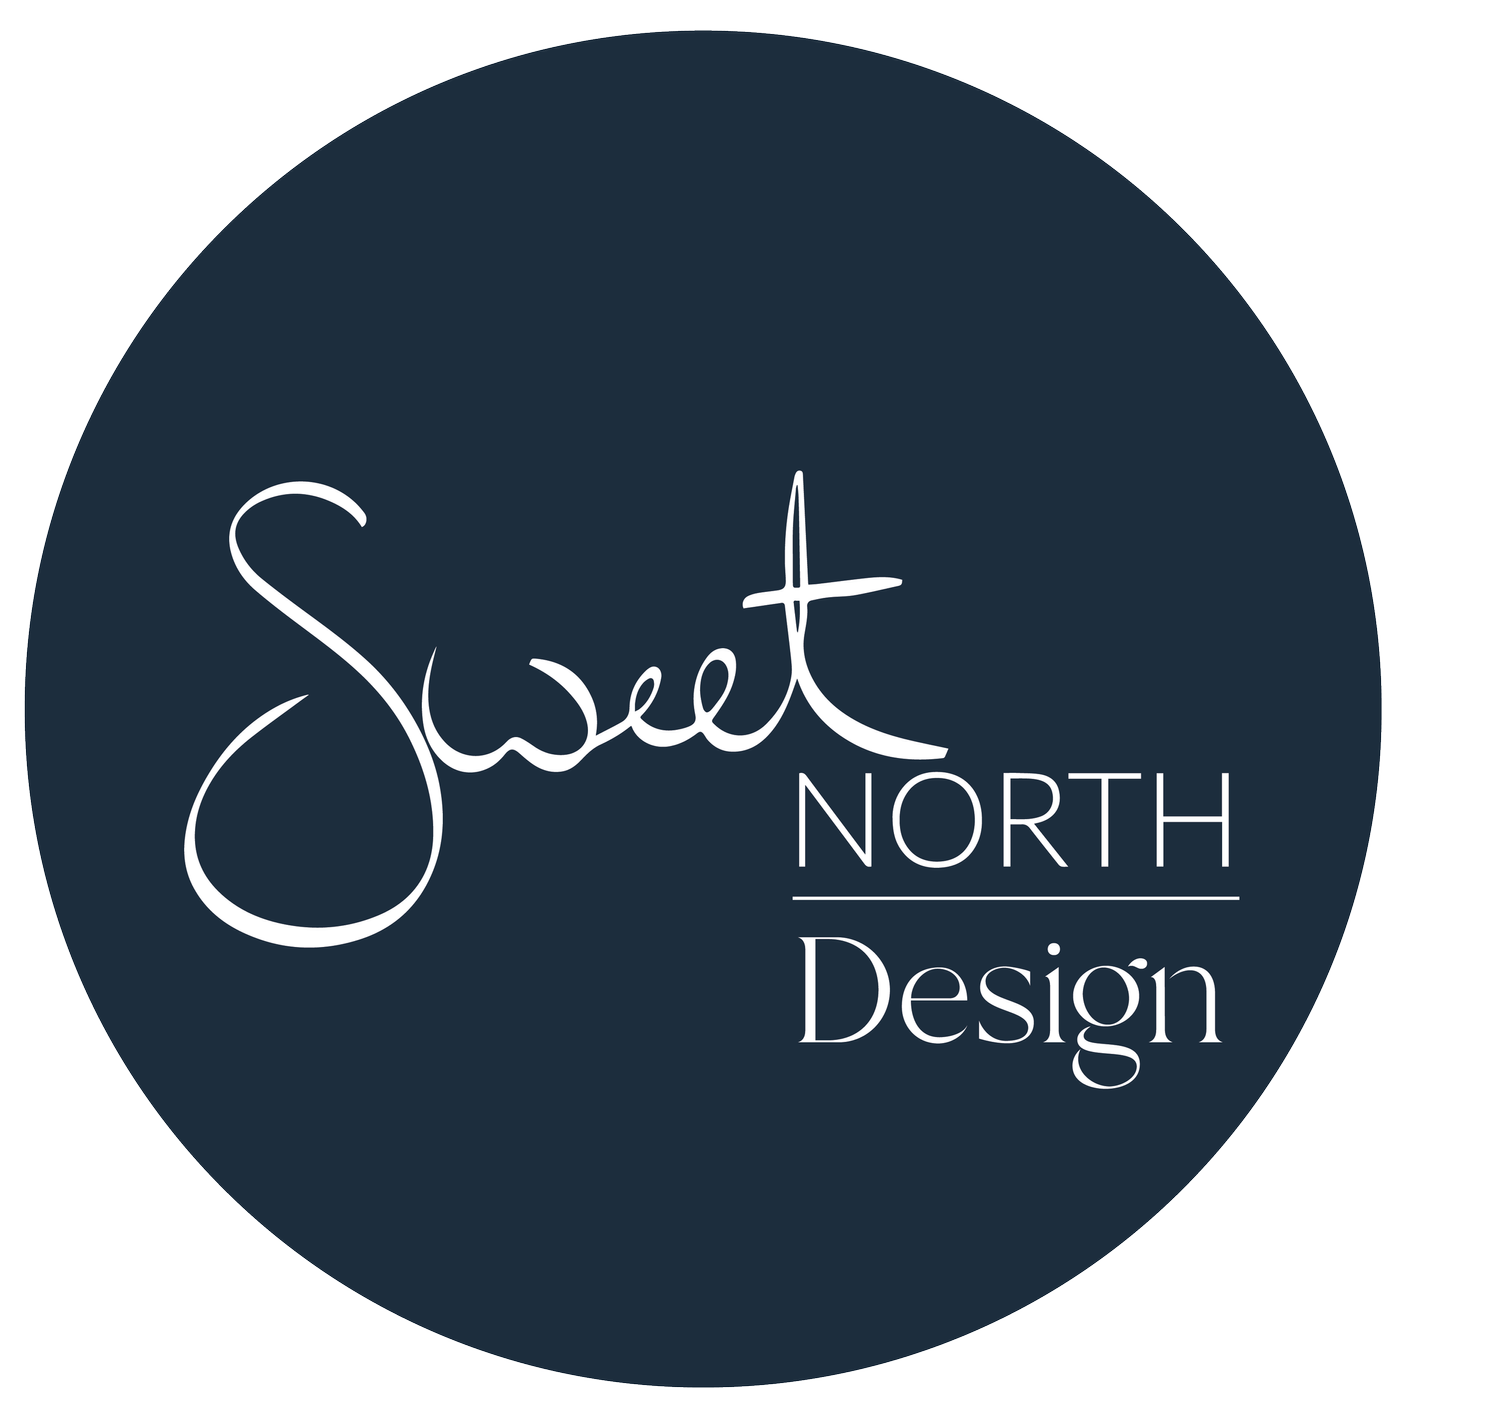 Sweetnorth Design